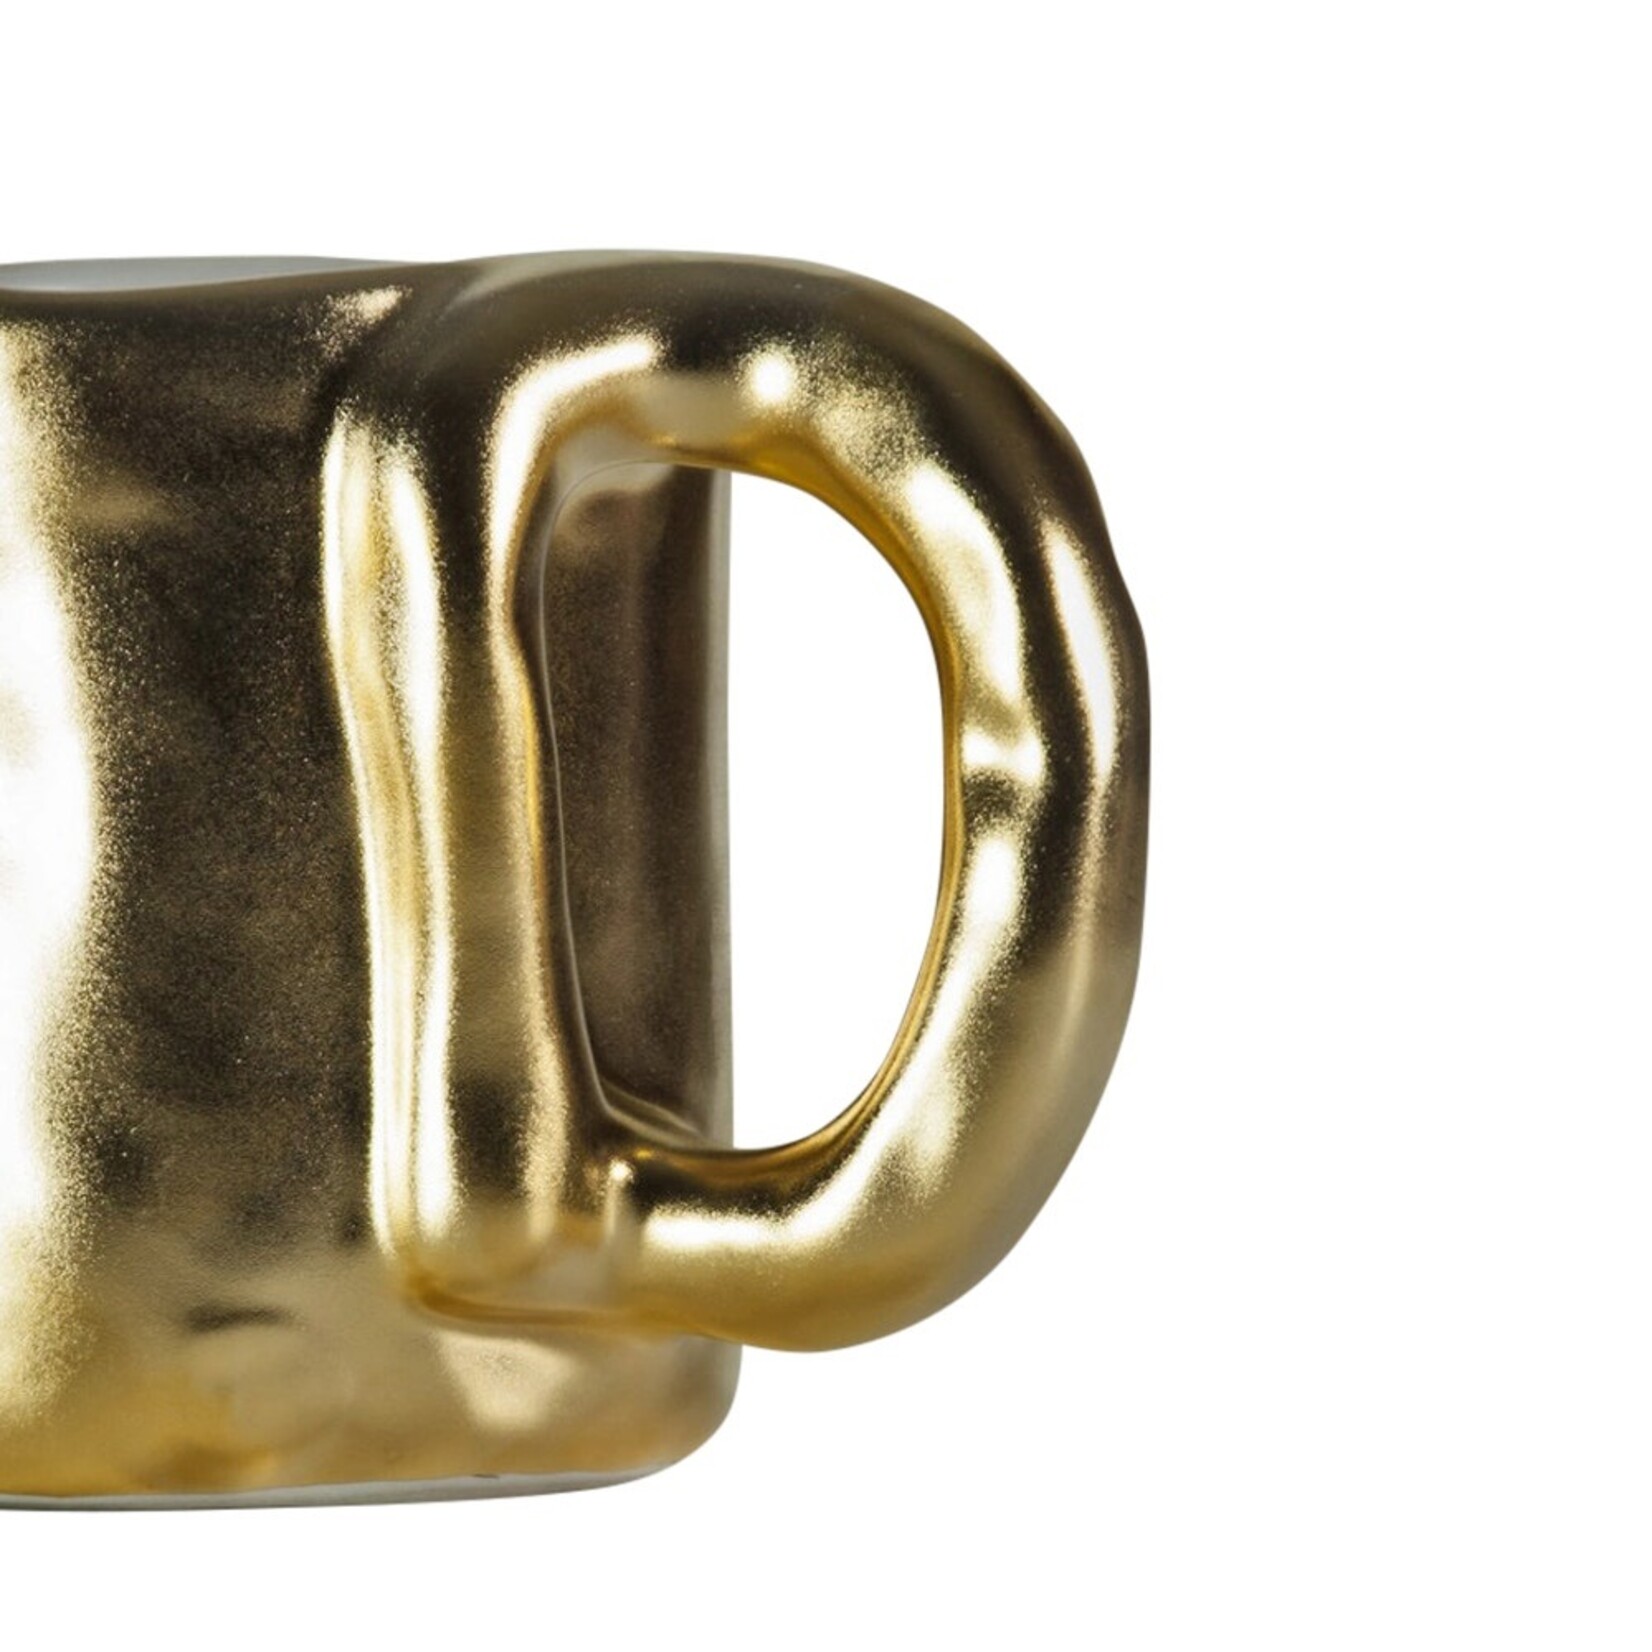 Mug No. "Two Hundred Five" 22k Gold